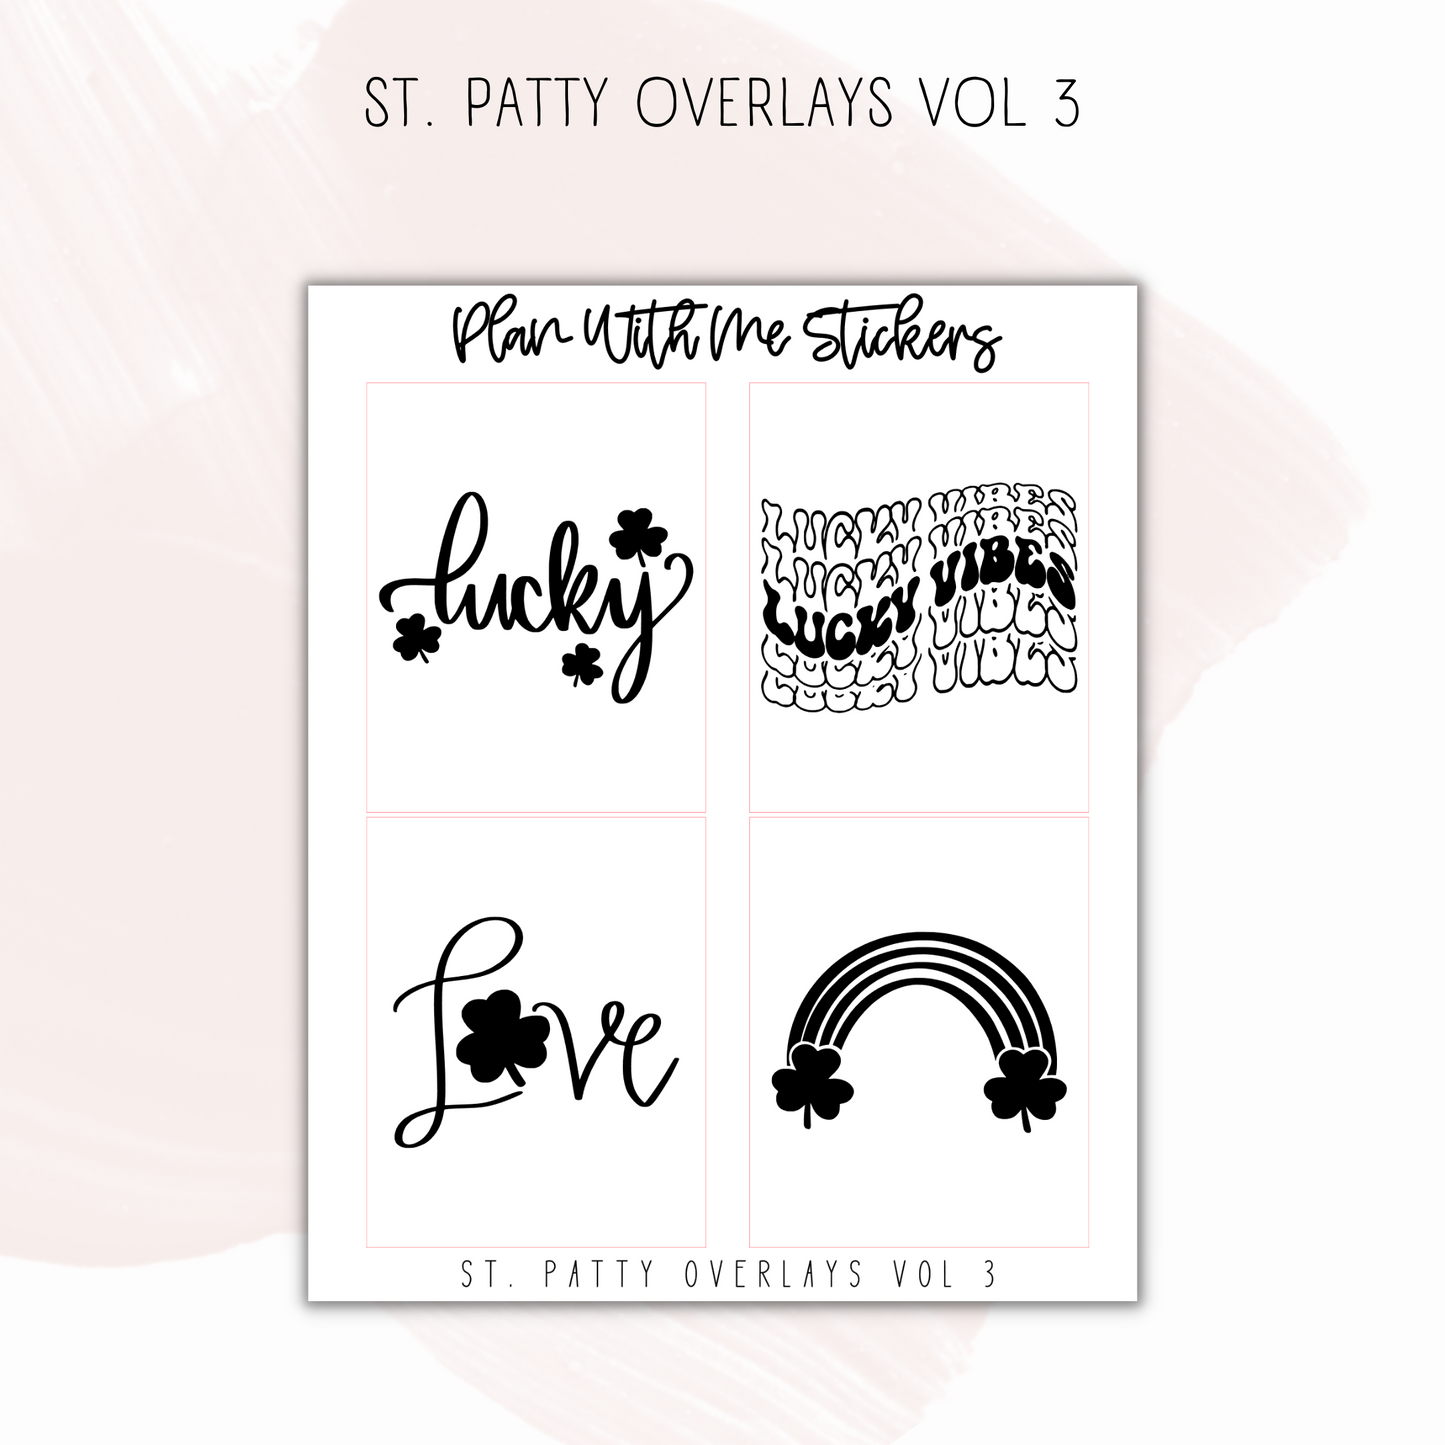 St. Patty Day Overlays Vol 3